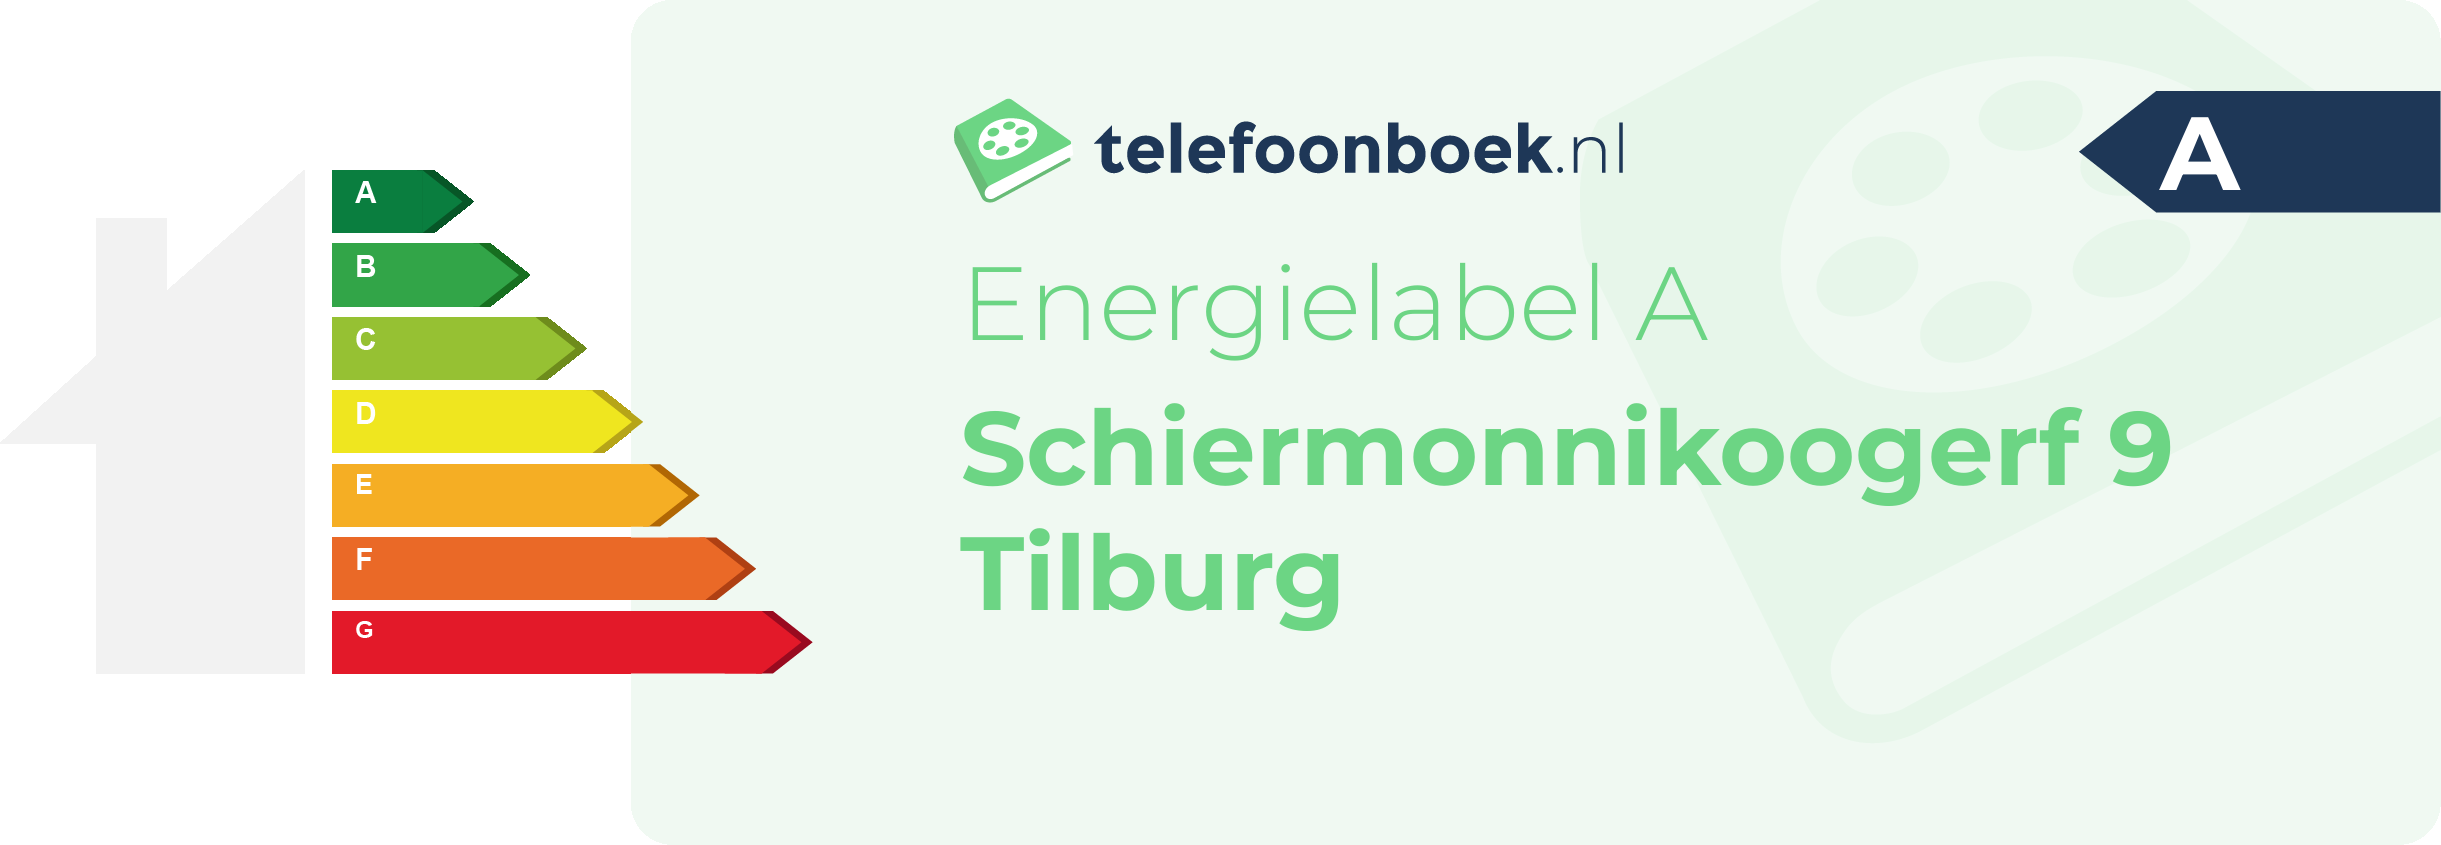 Energielabel Schiermonnikoogerf 9 Tilburg